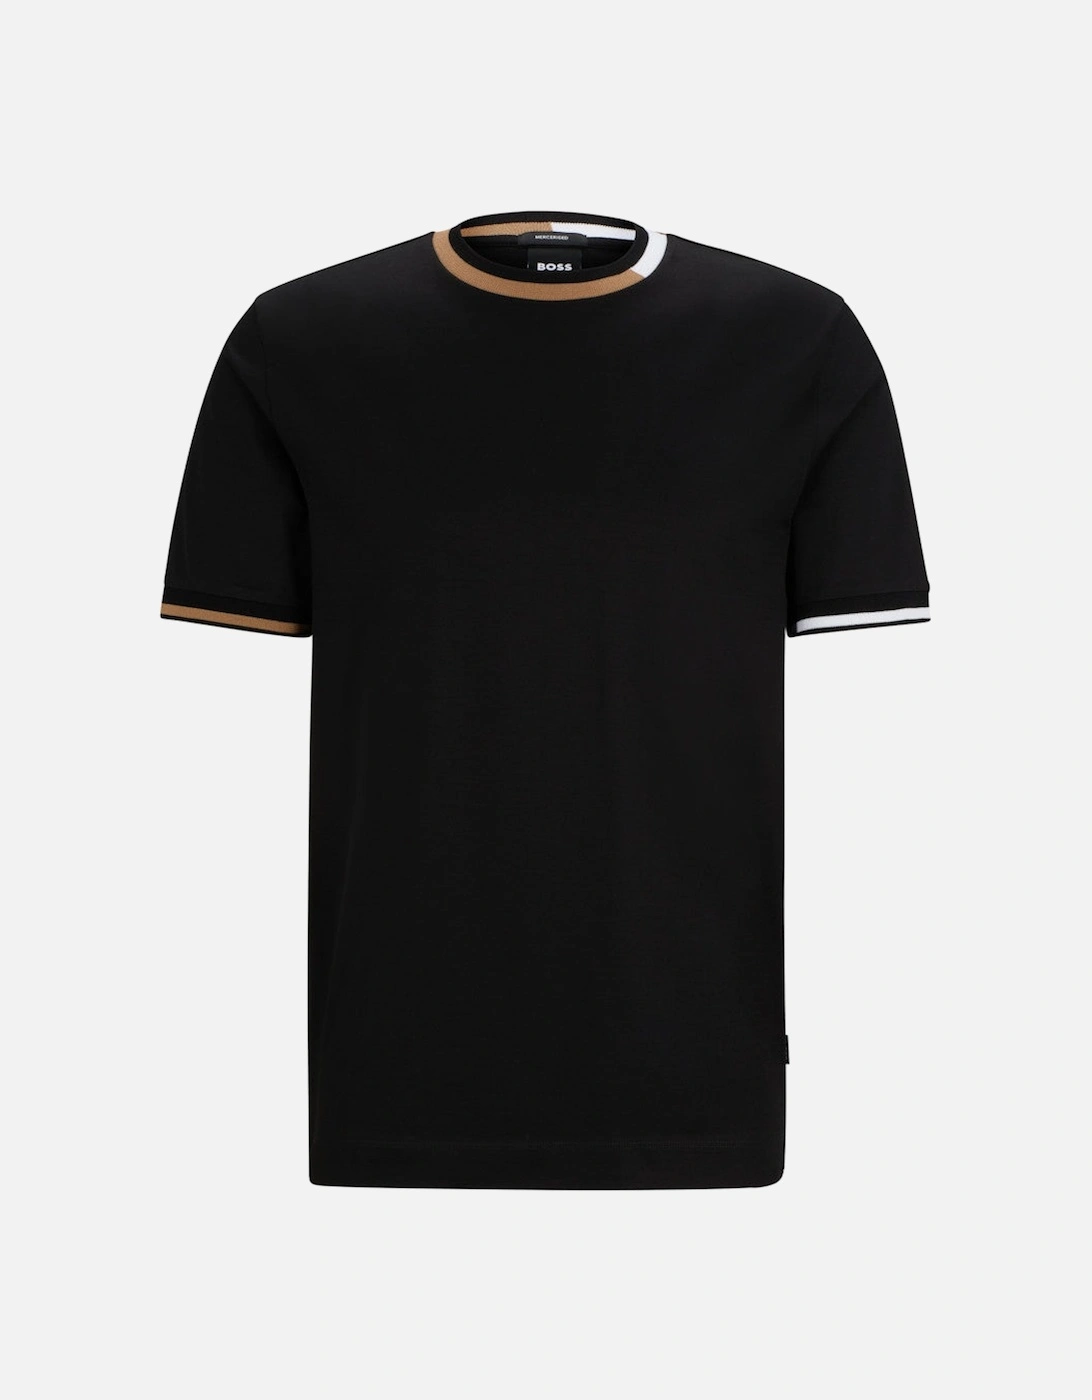 BOSS Black Thompson211 T-Shirt 10258145 001 Black, 2 of 1